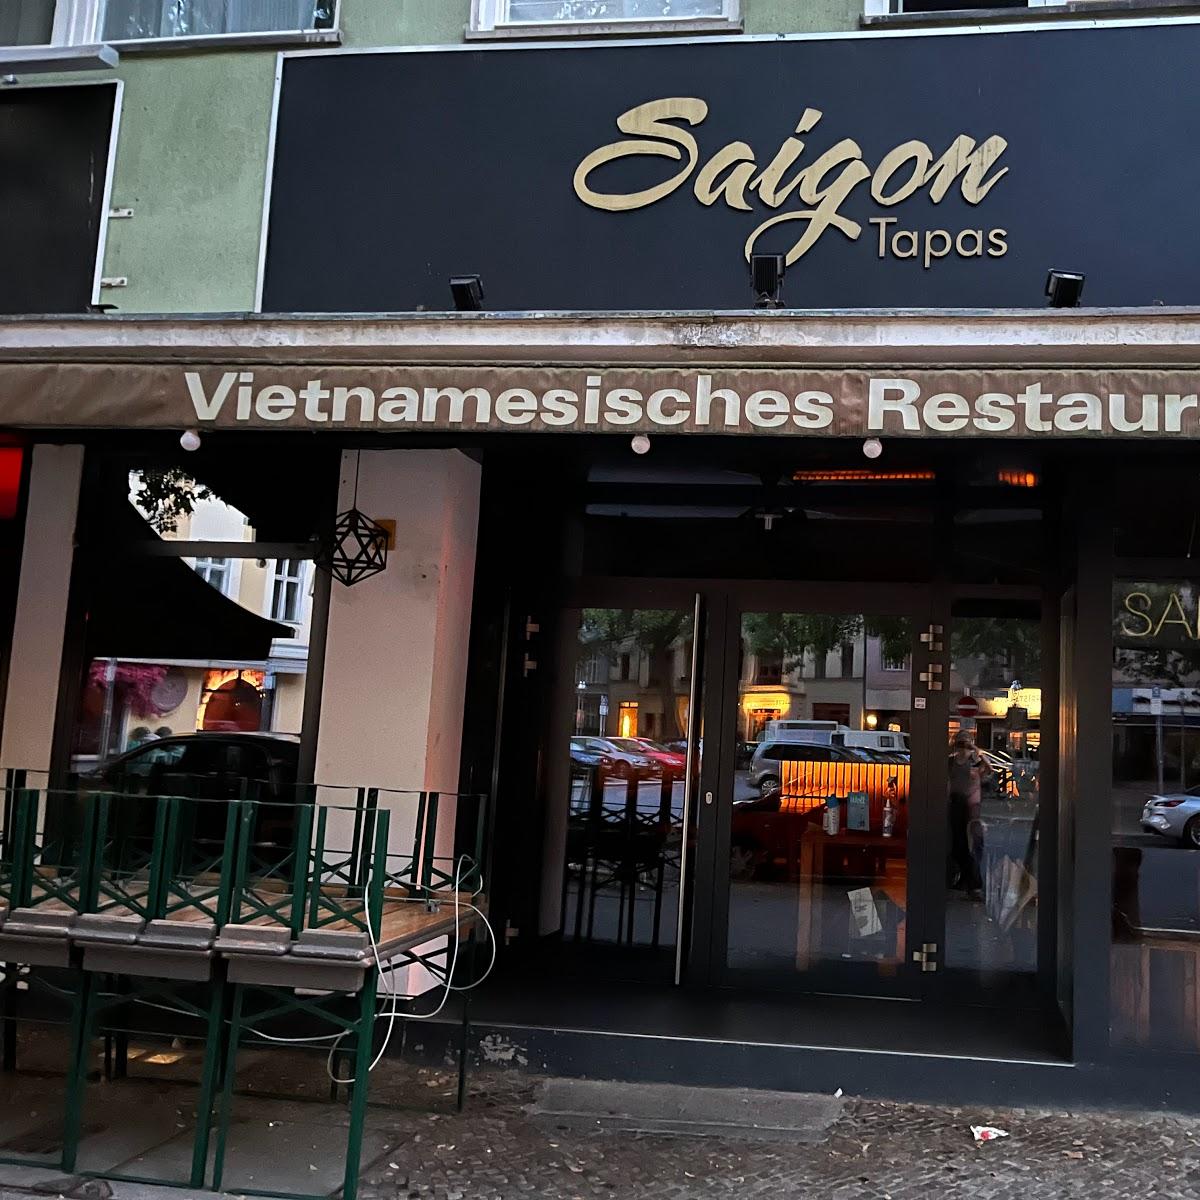 Restaurant "Saigon Tapas" in Berlin